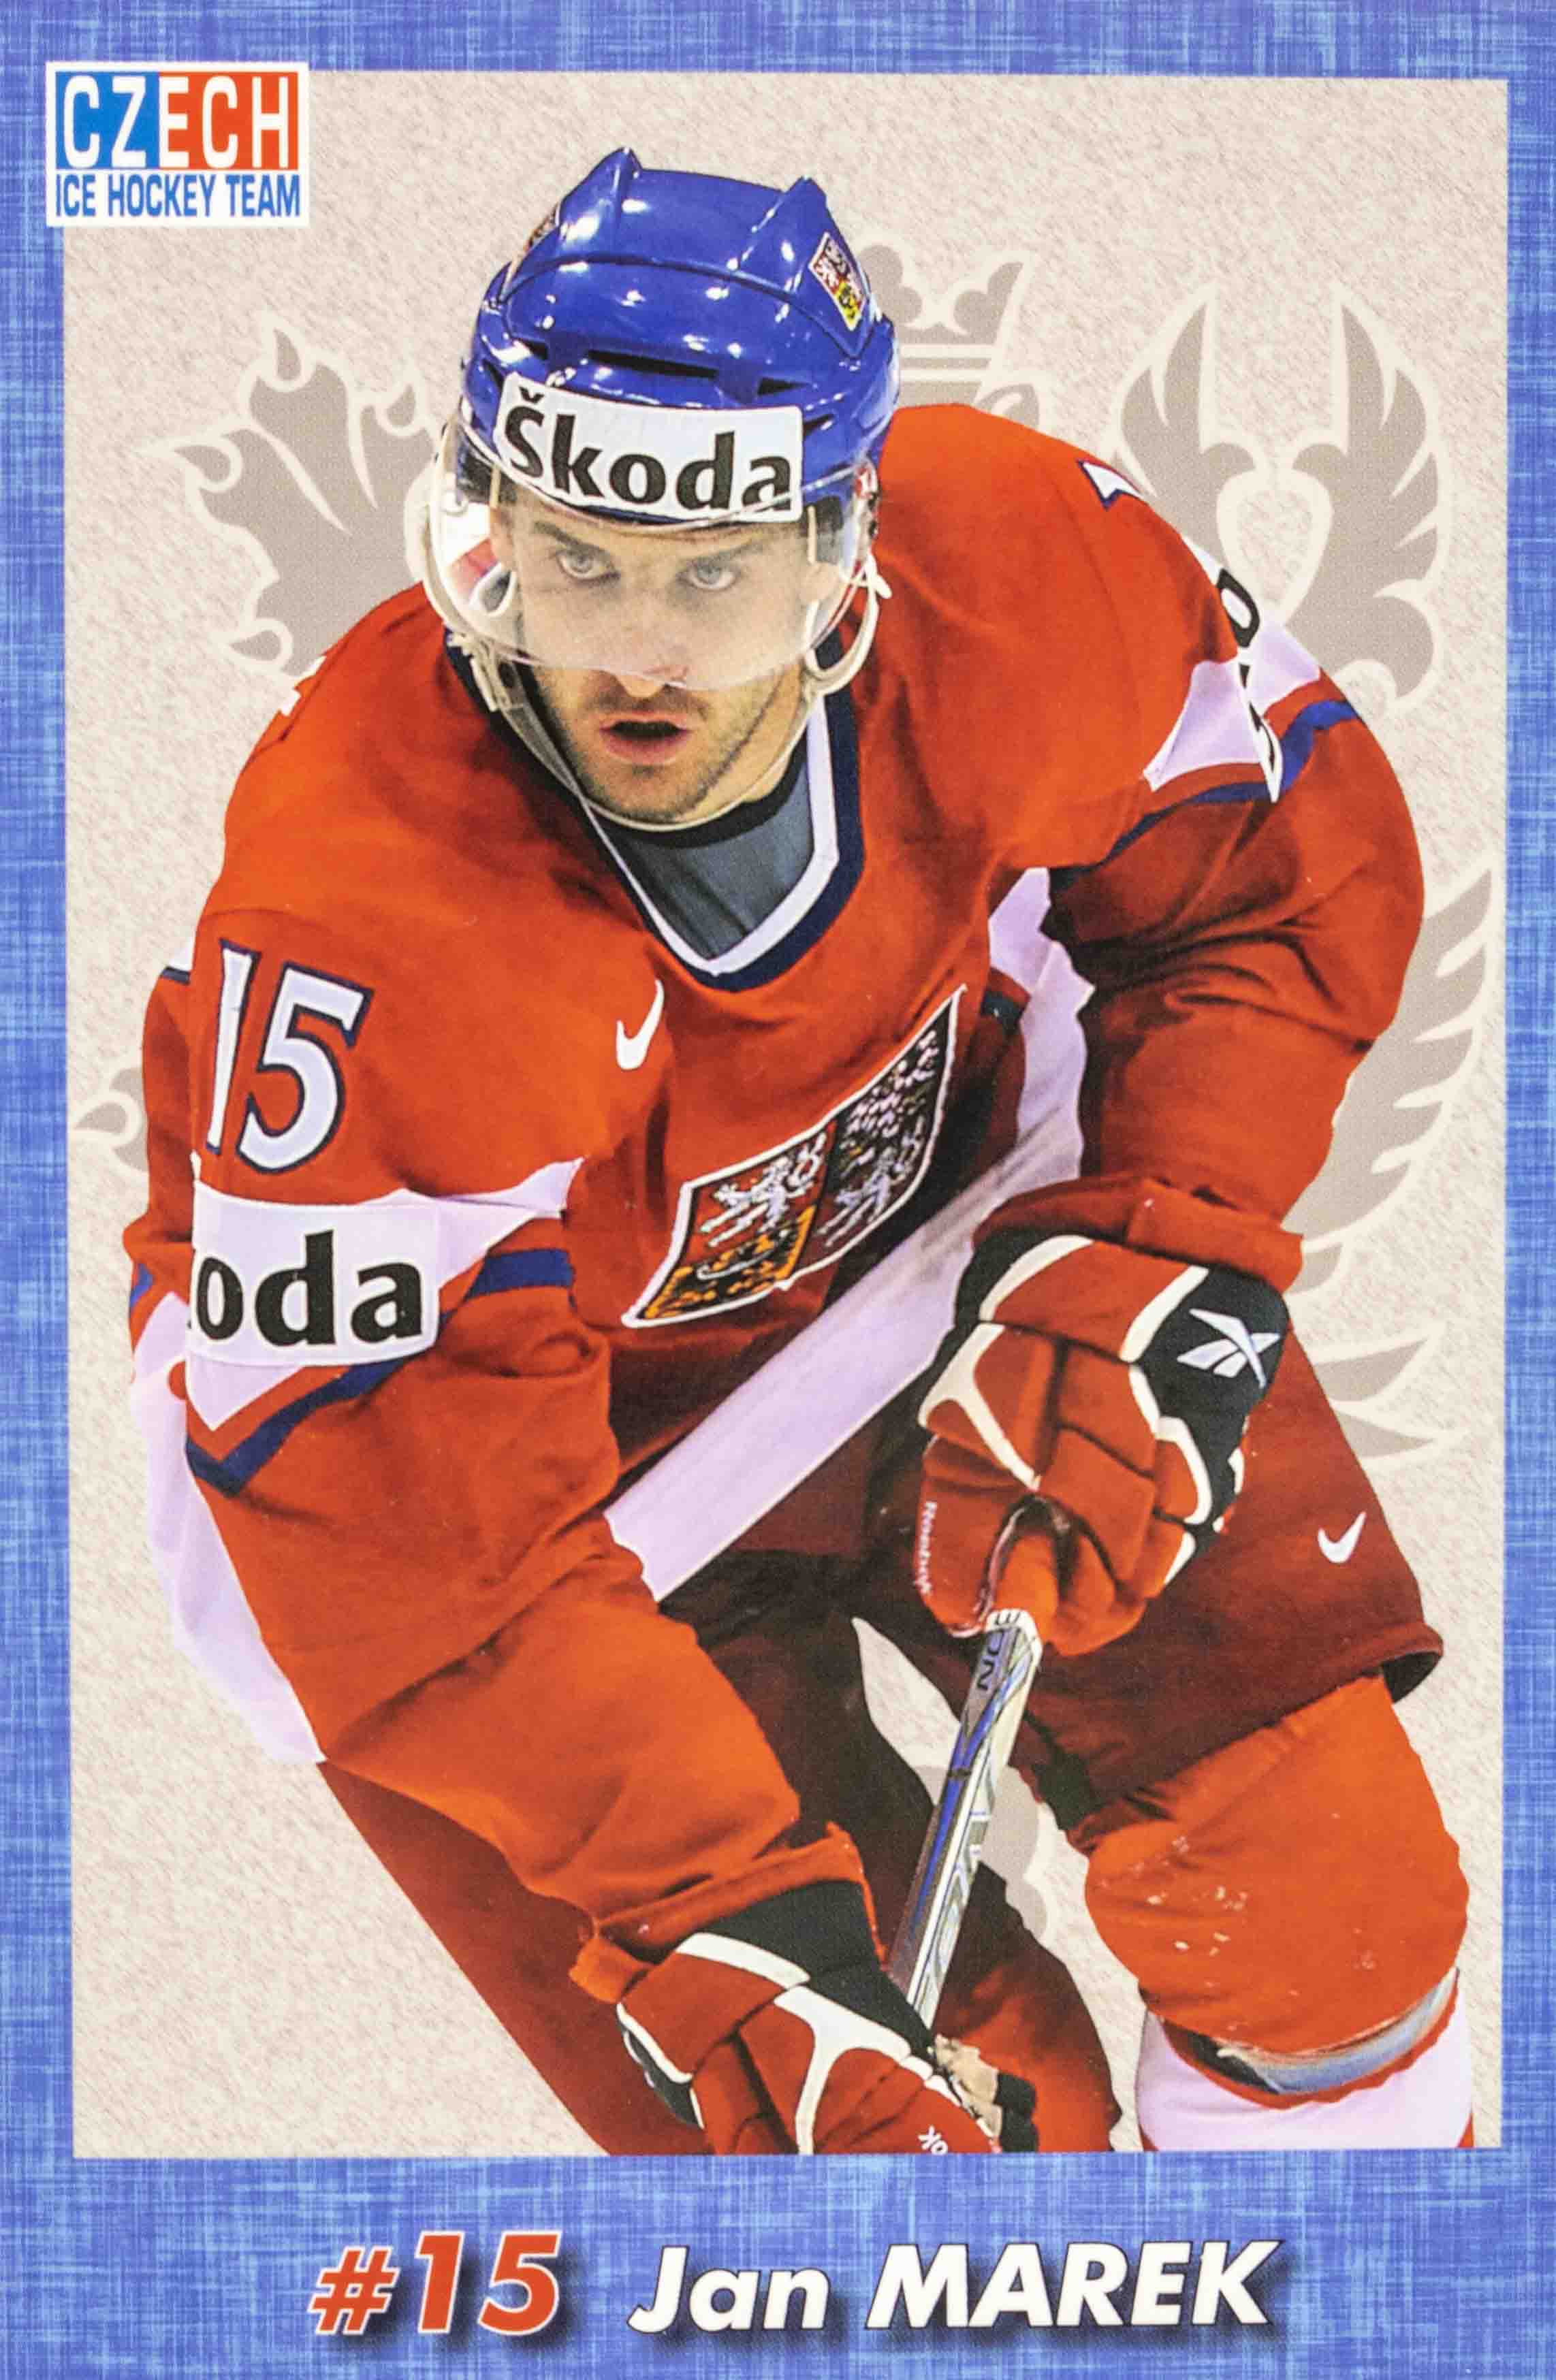 Hokejová karta, Czech Ice hockey team, Jan Marek